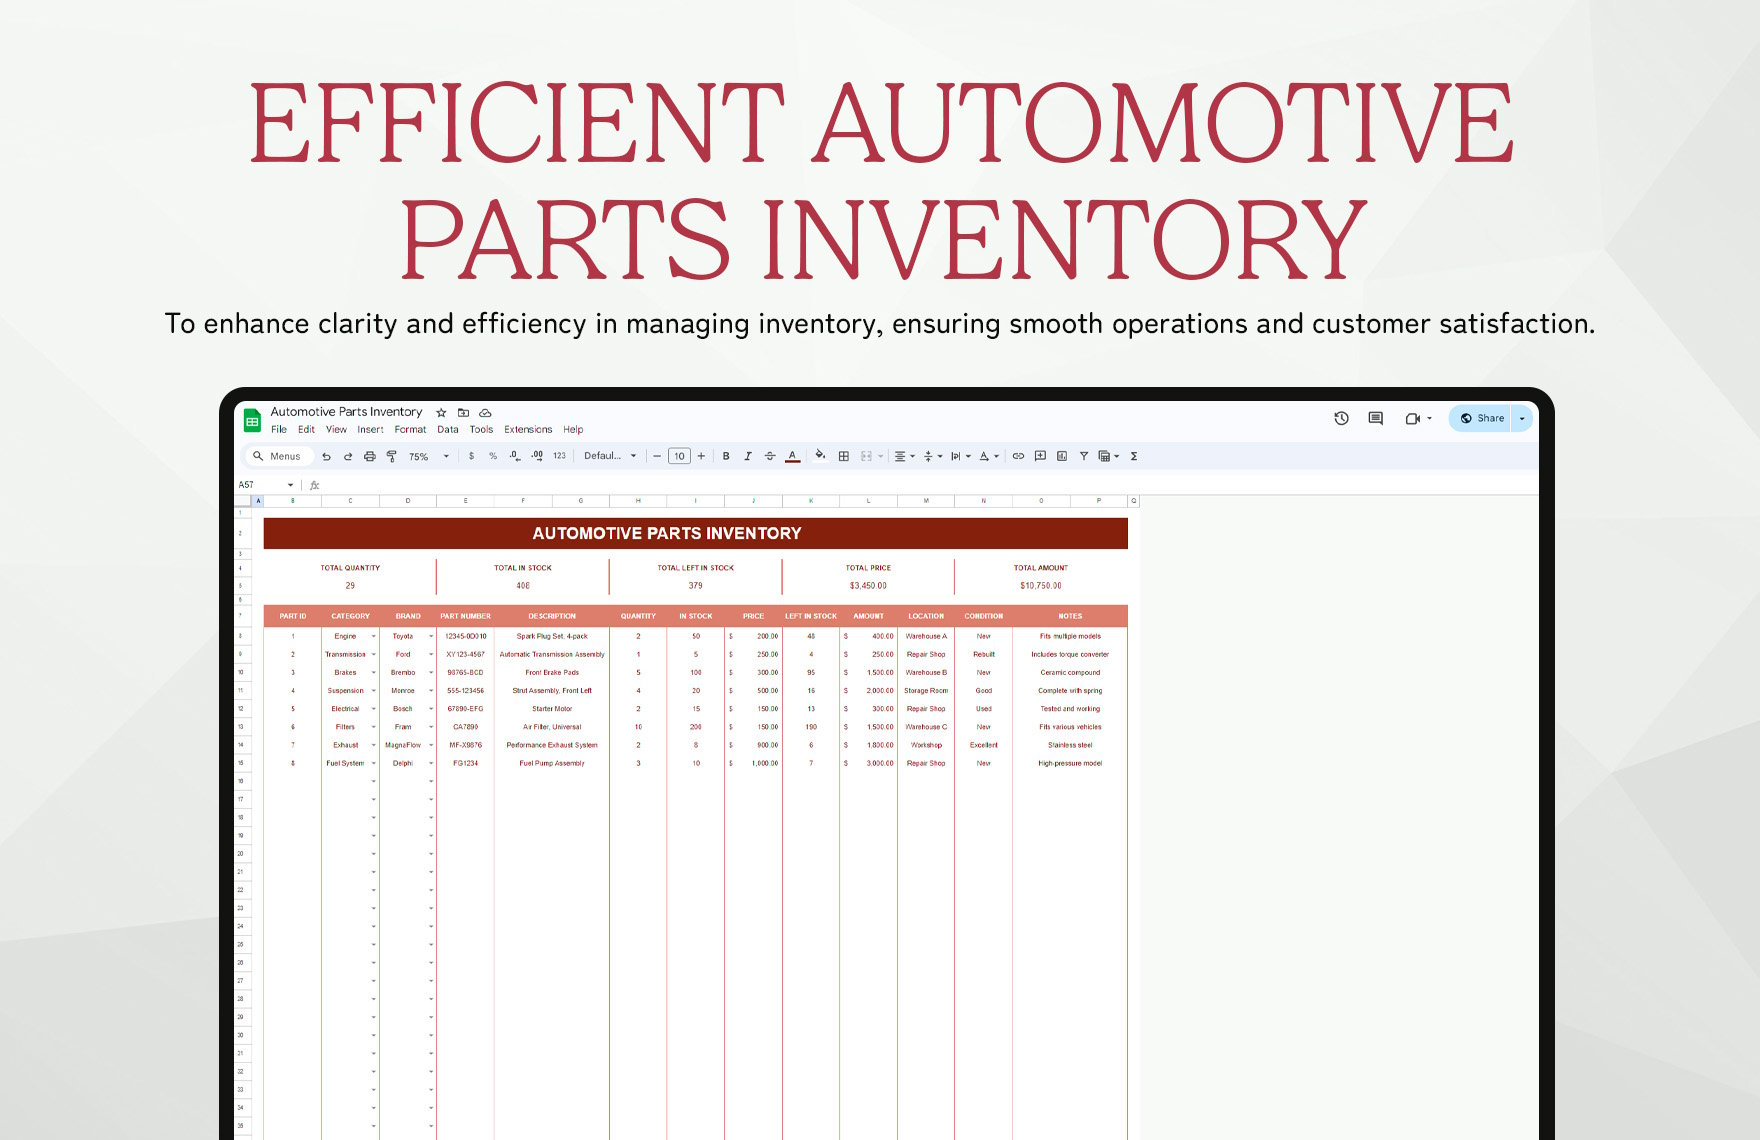 Automotive Parts Inventory Template